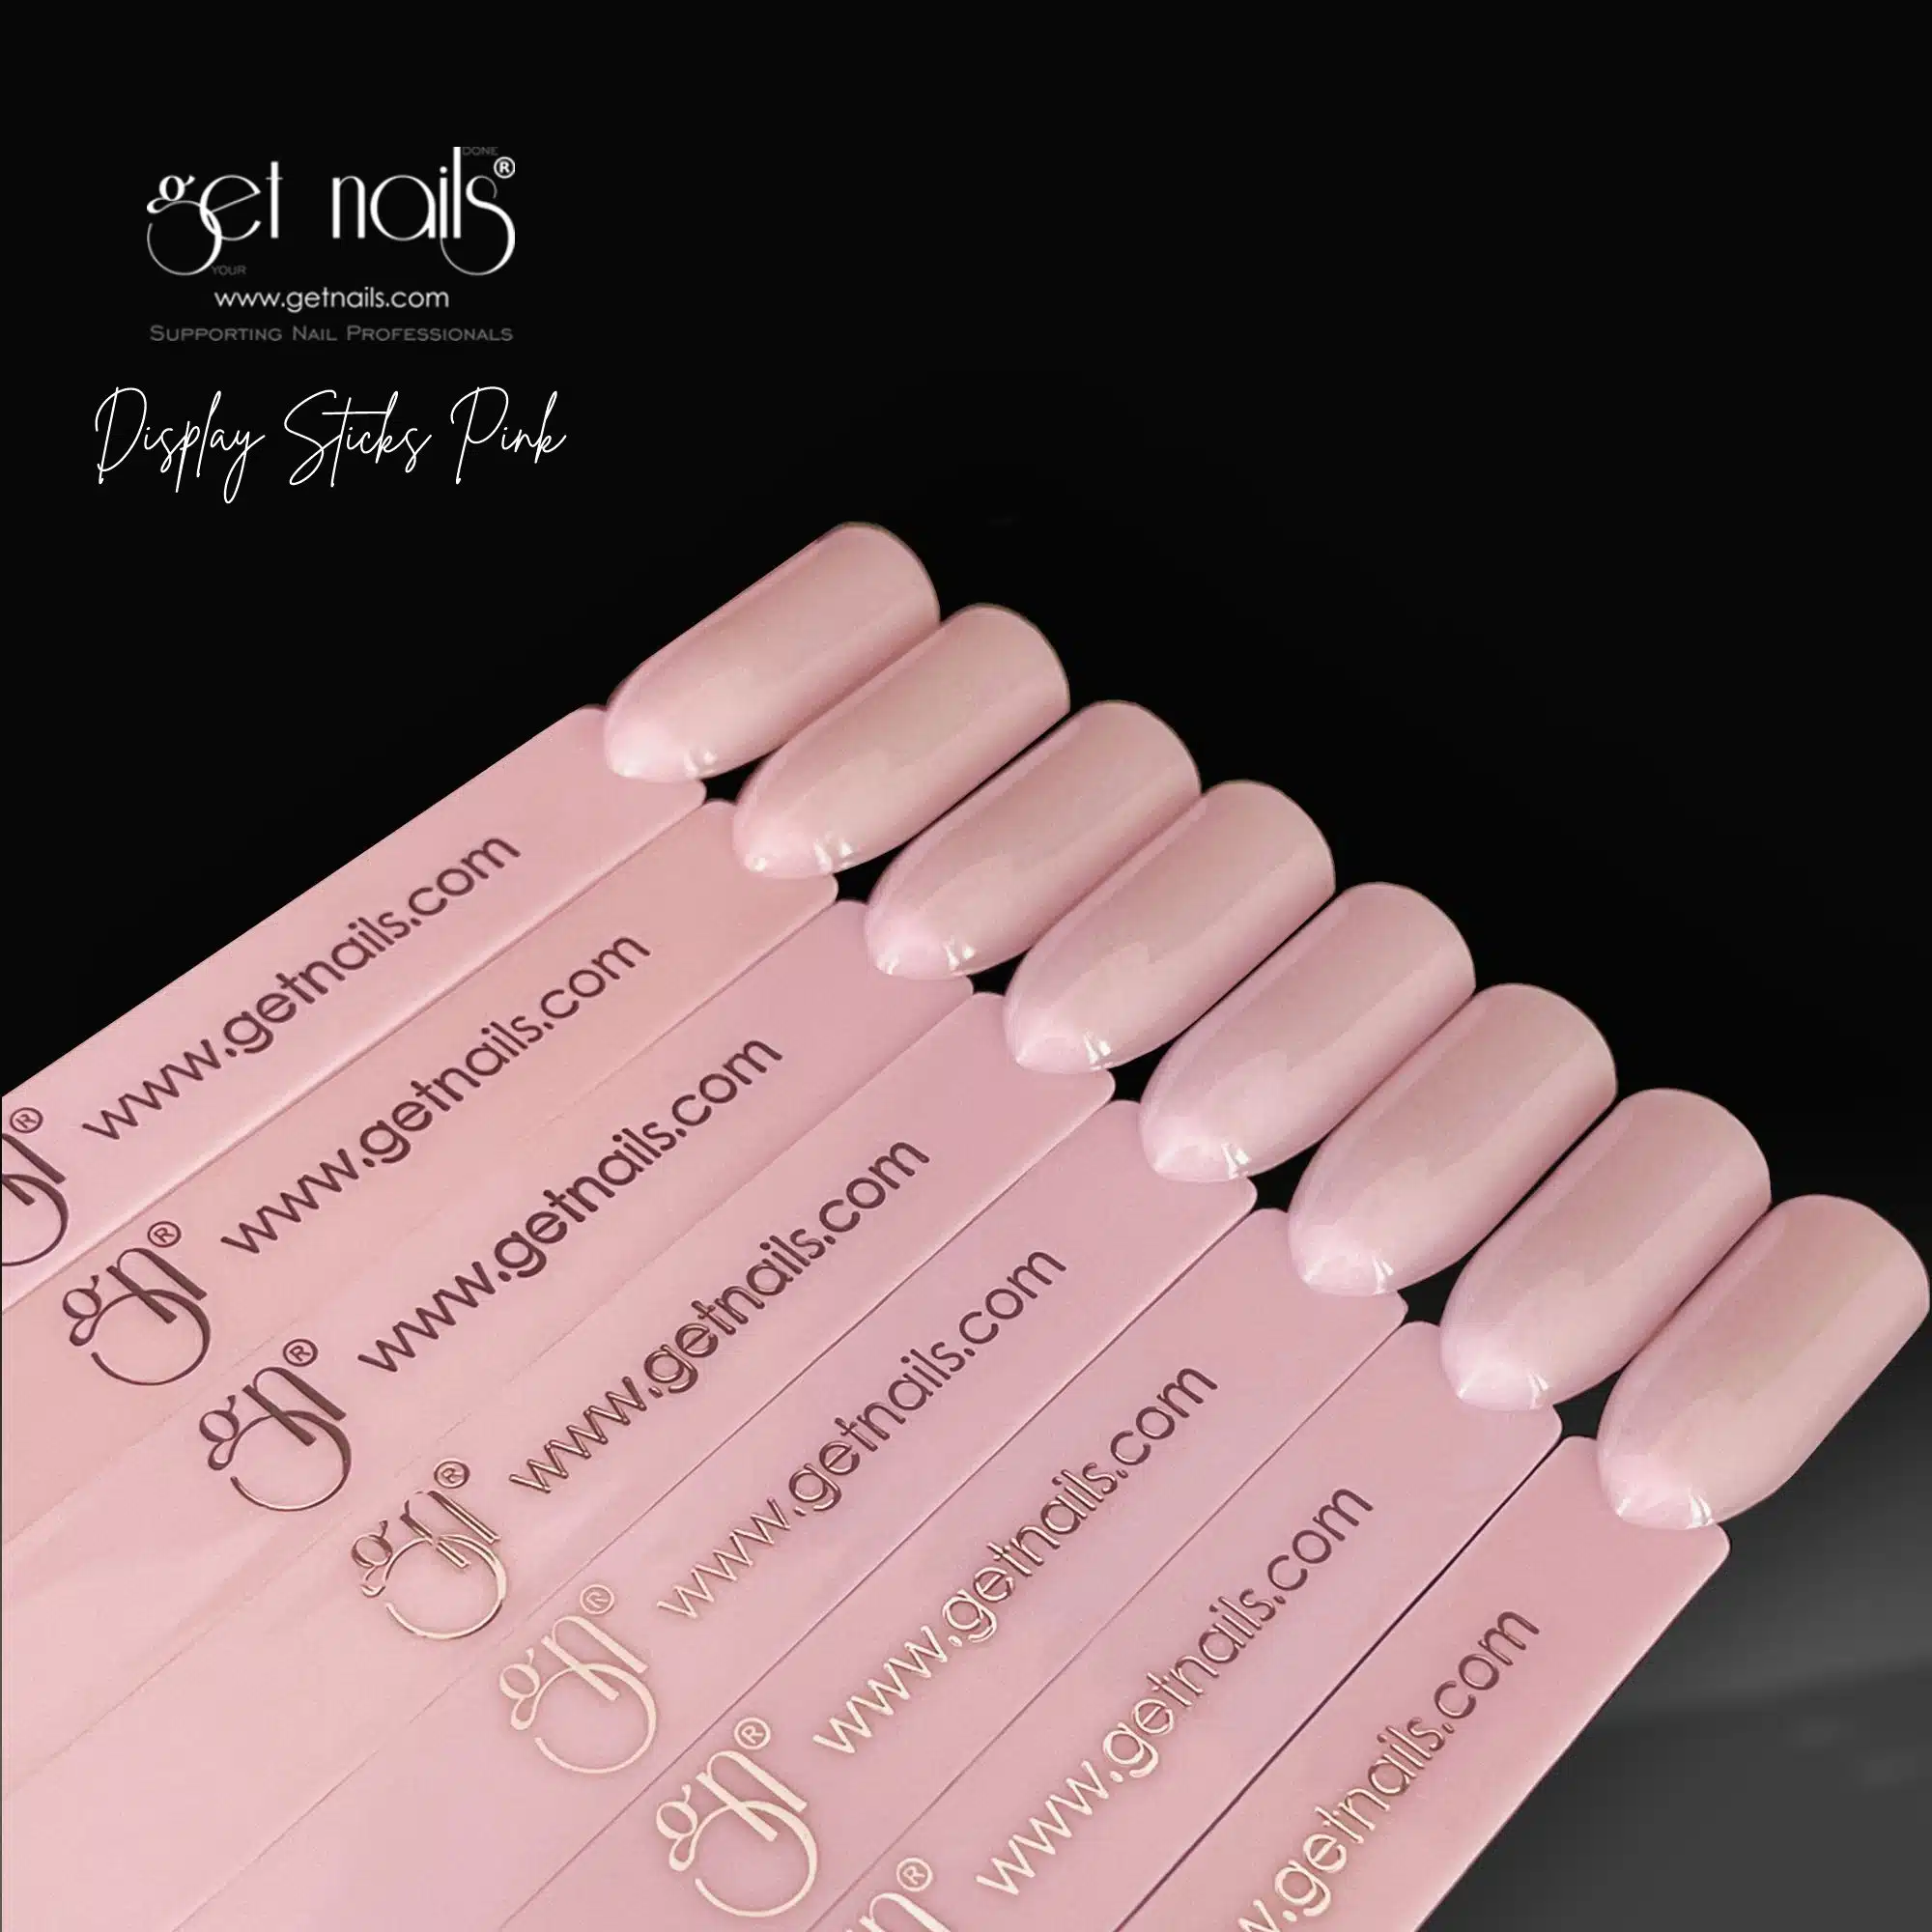 Get Nails Austria - Display Sticks pink, 50 Stk.